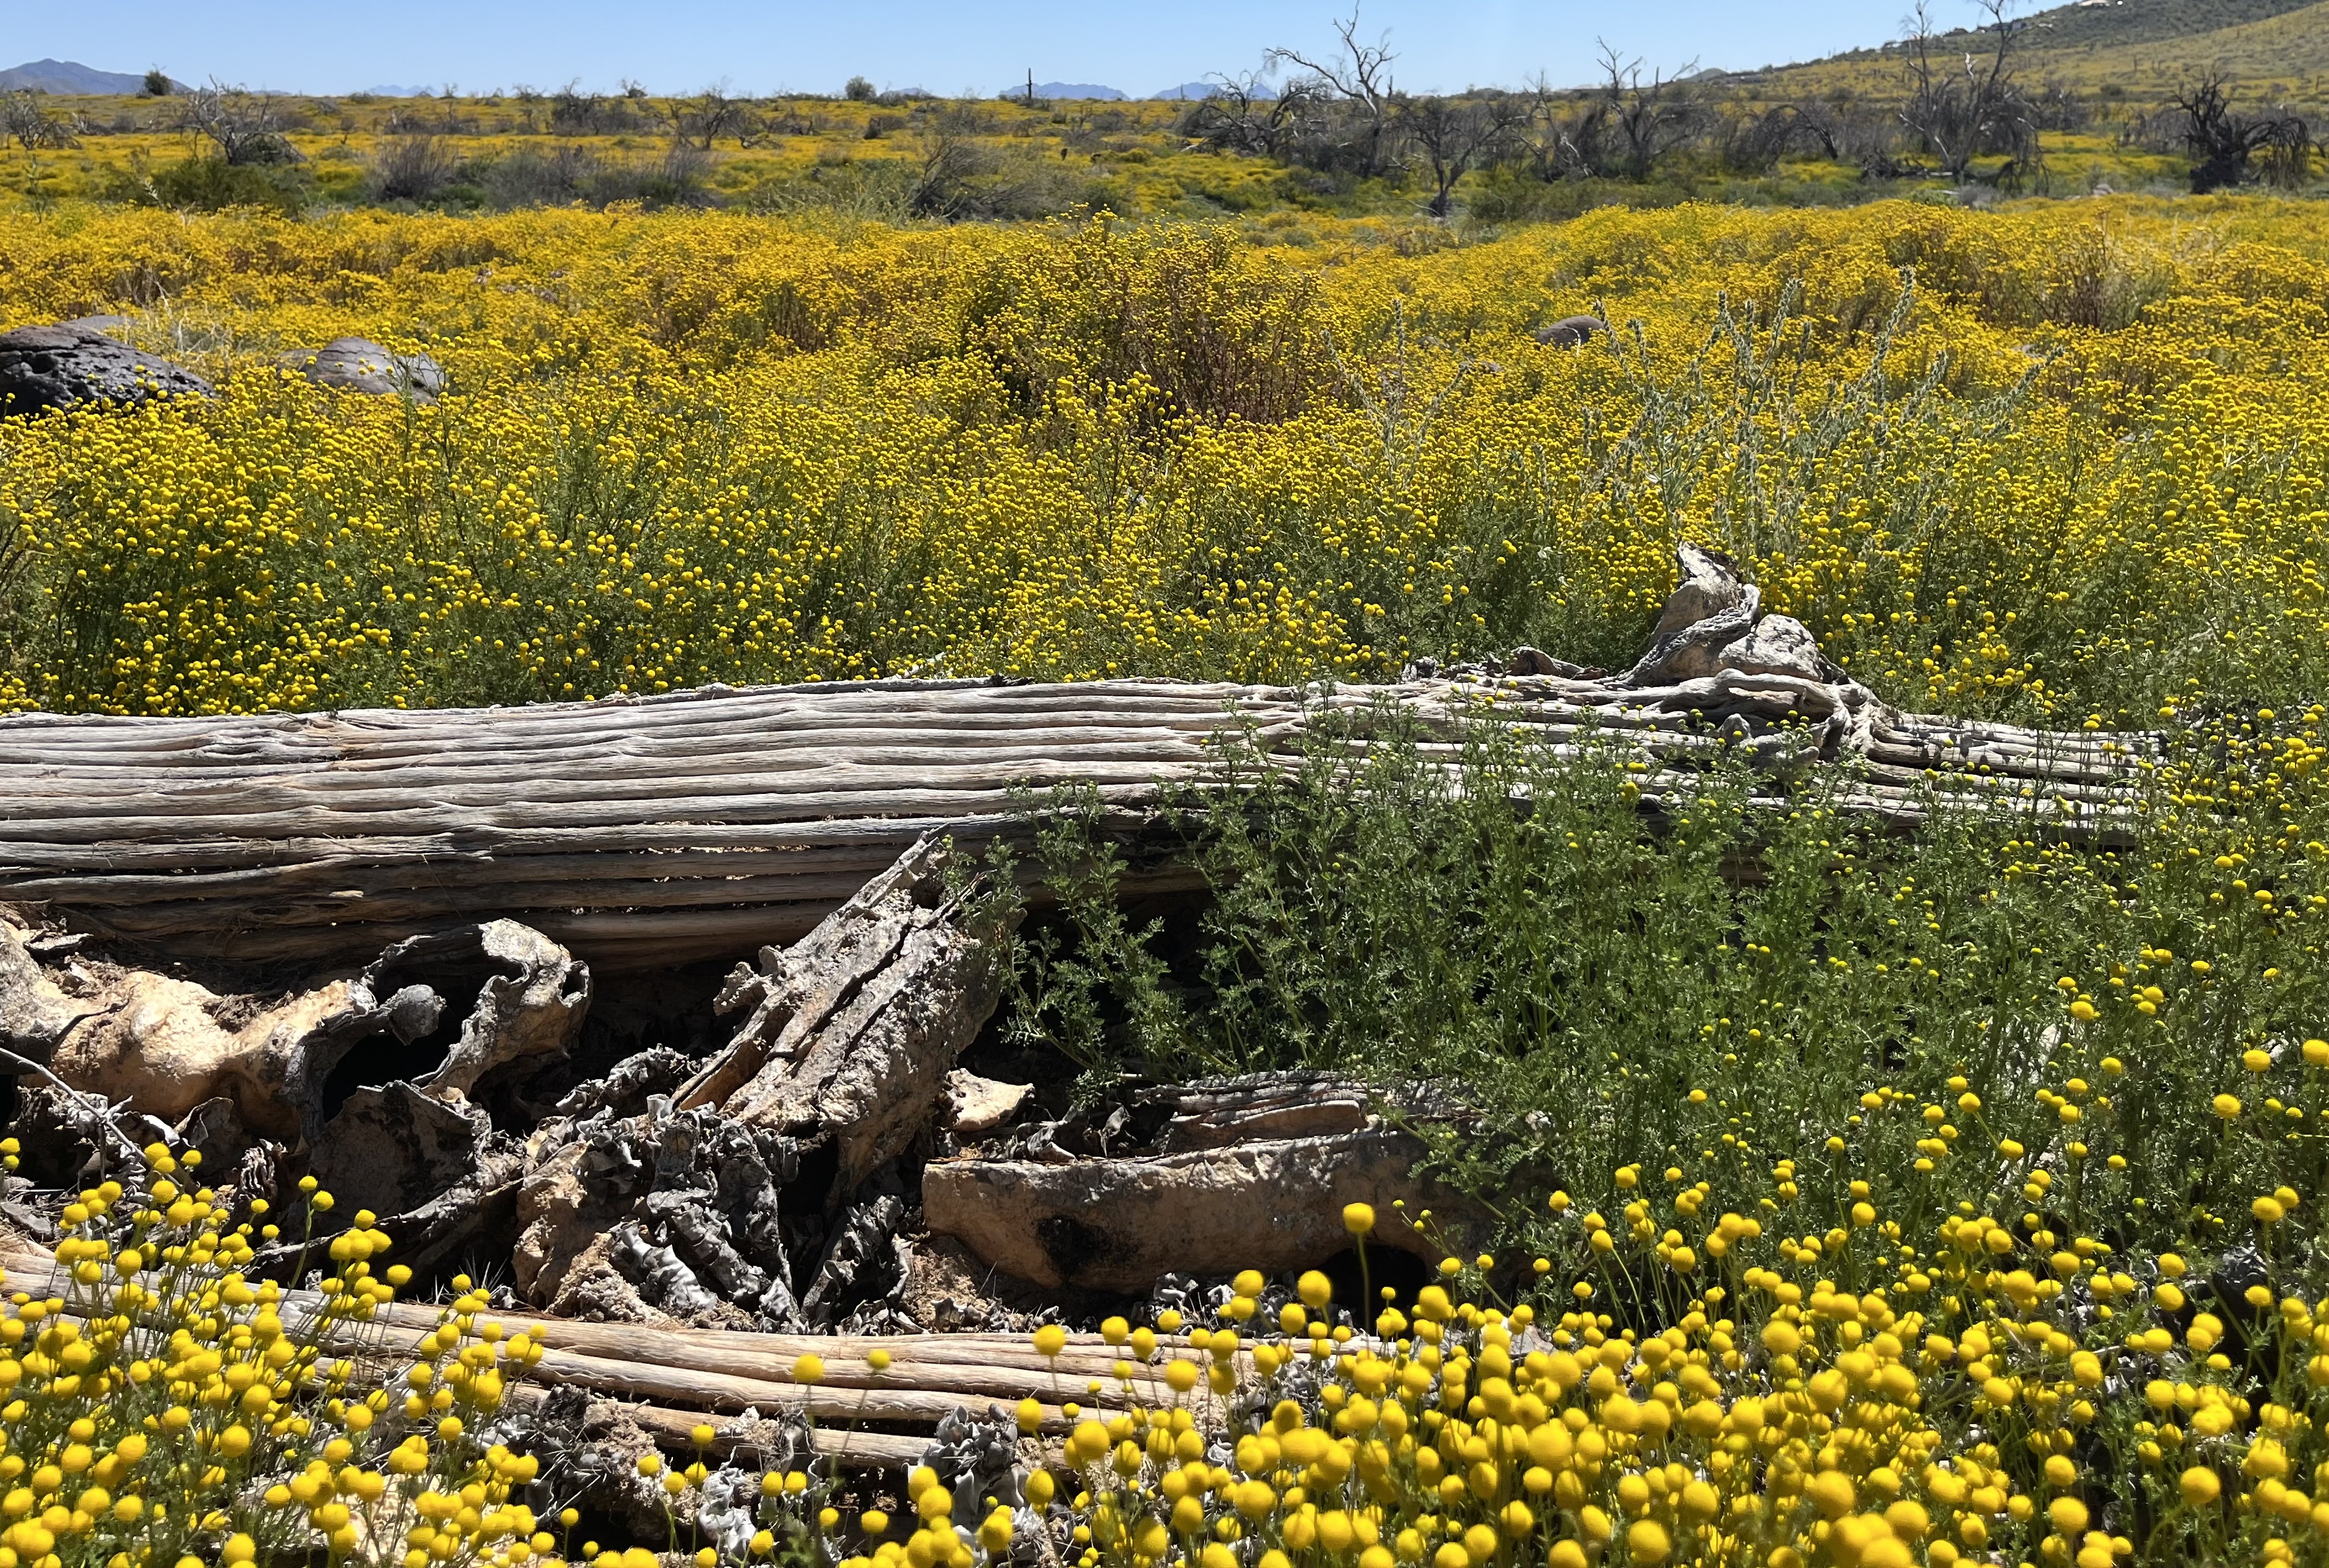 Small bright yellow flowers fill the landscape around a fallen saquaro.